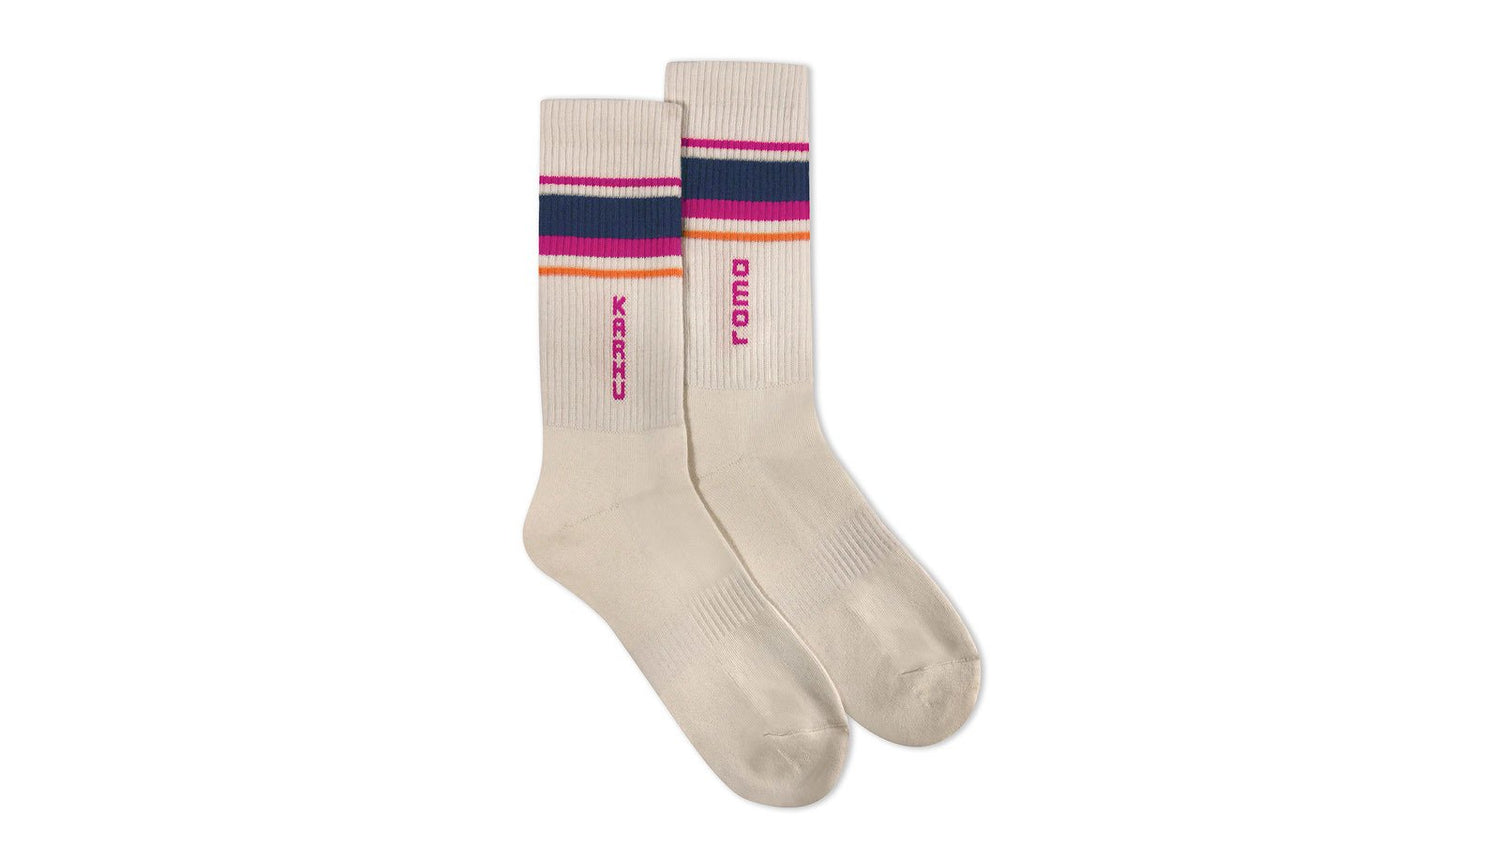 KARHU Roma Tubular socks made in Italy